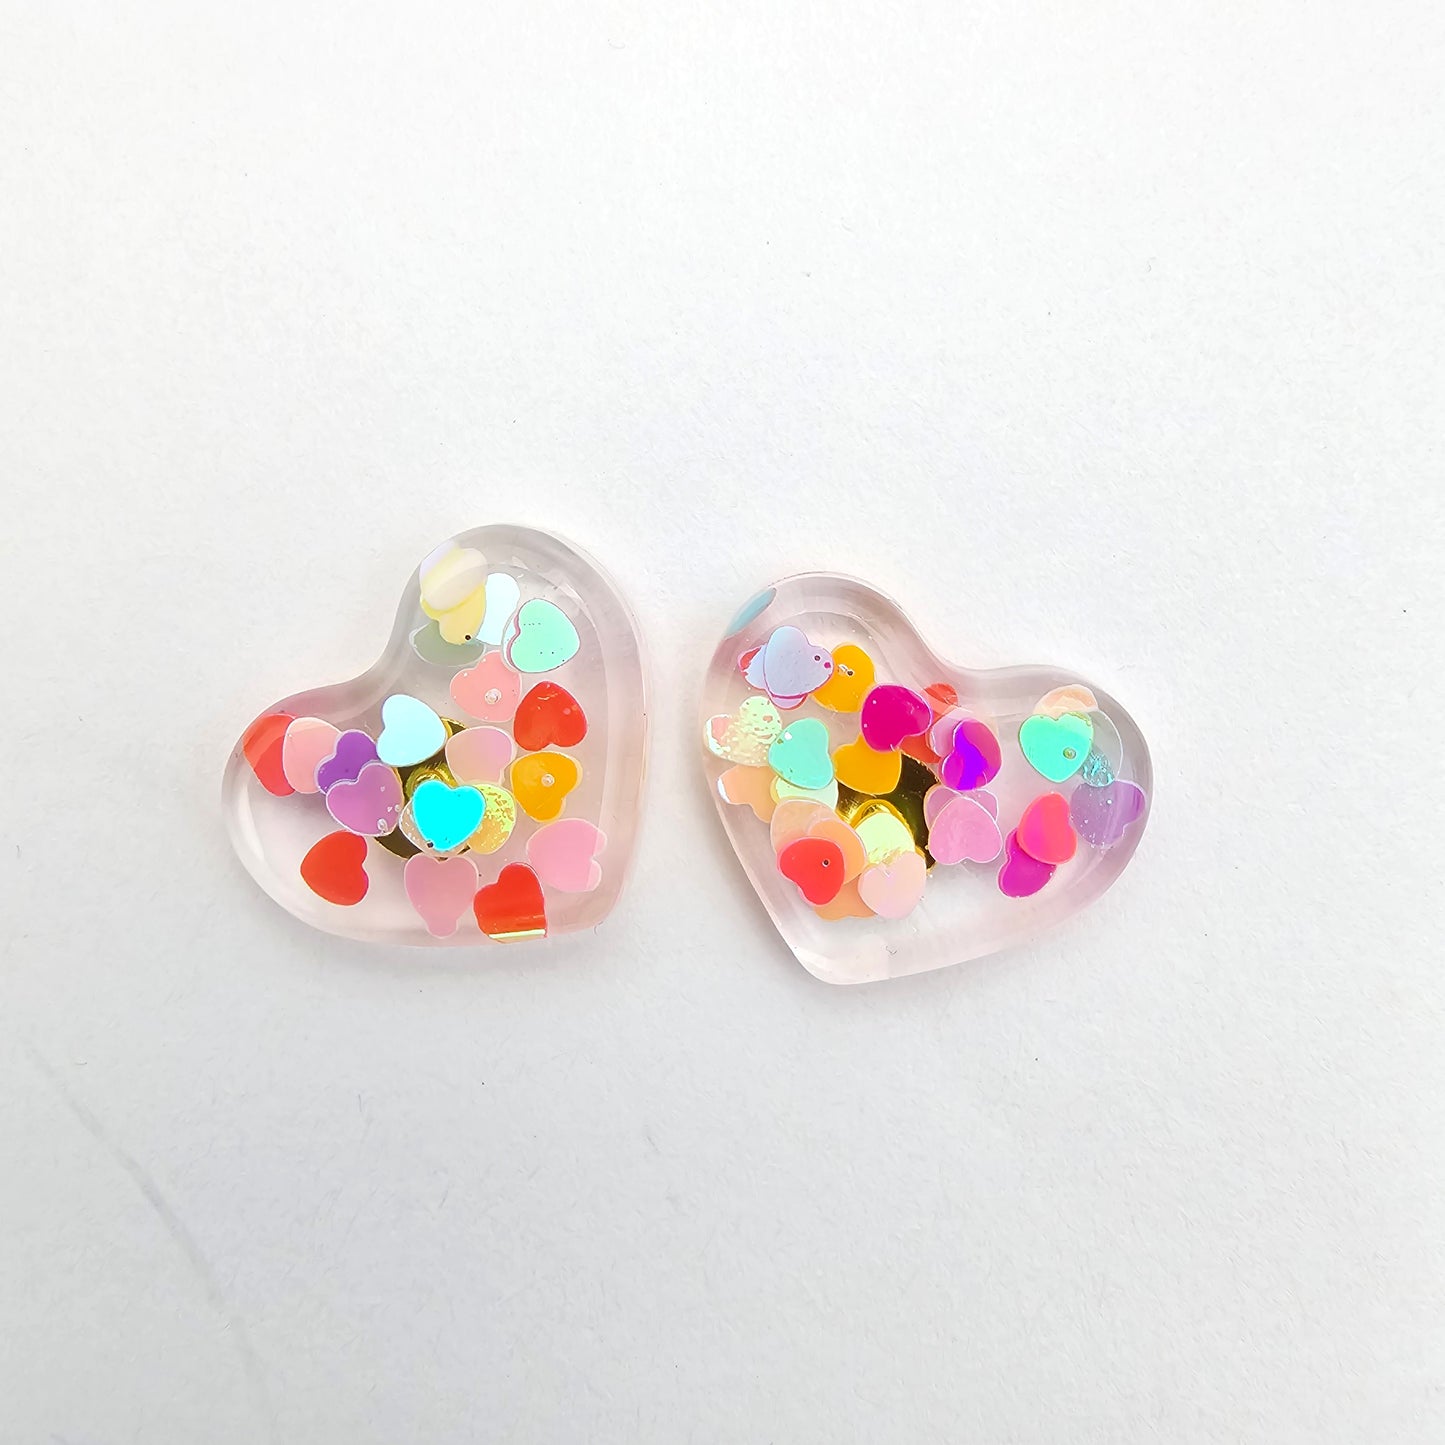 Resin heart earrings